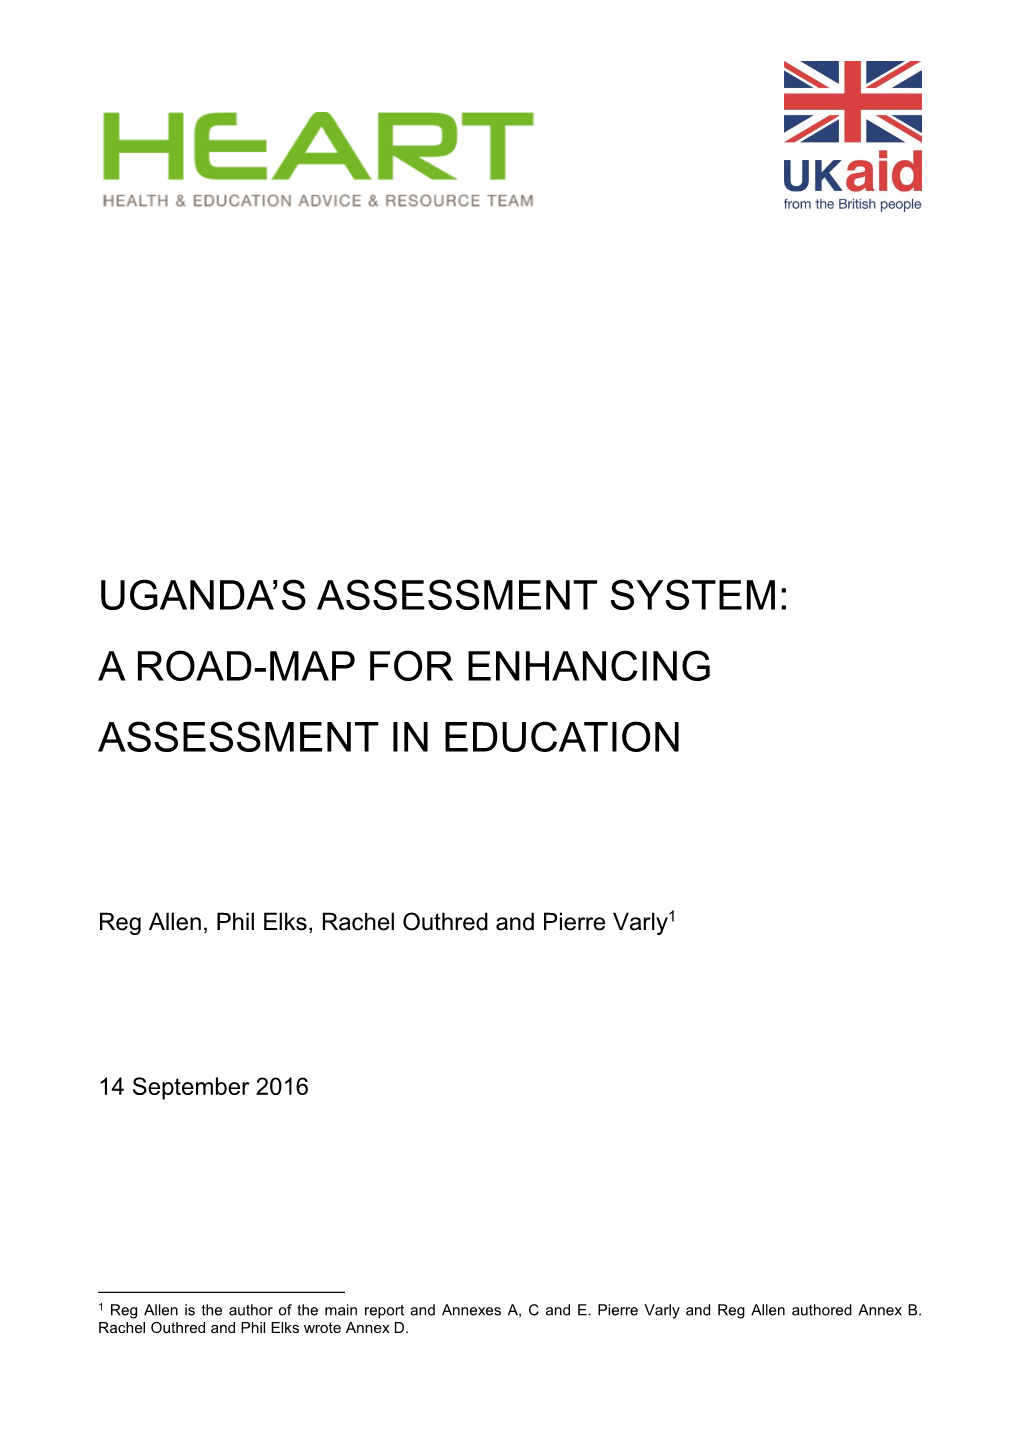 Road-Map for Enhancing Assessment in Uganda